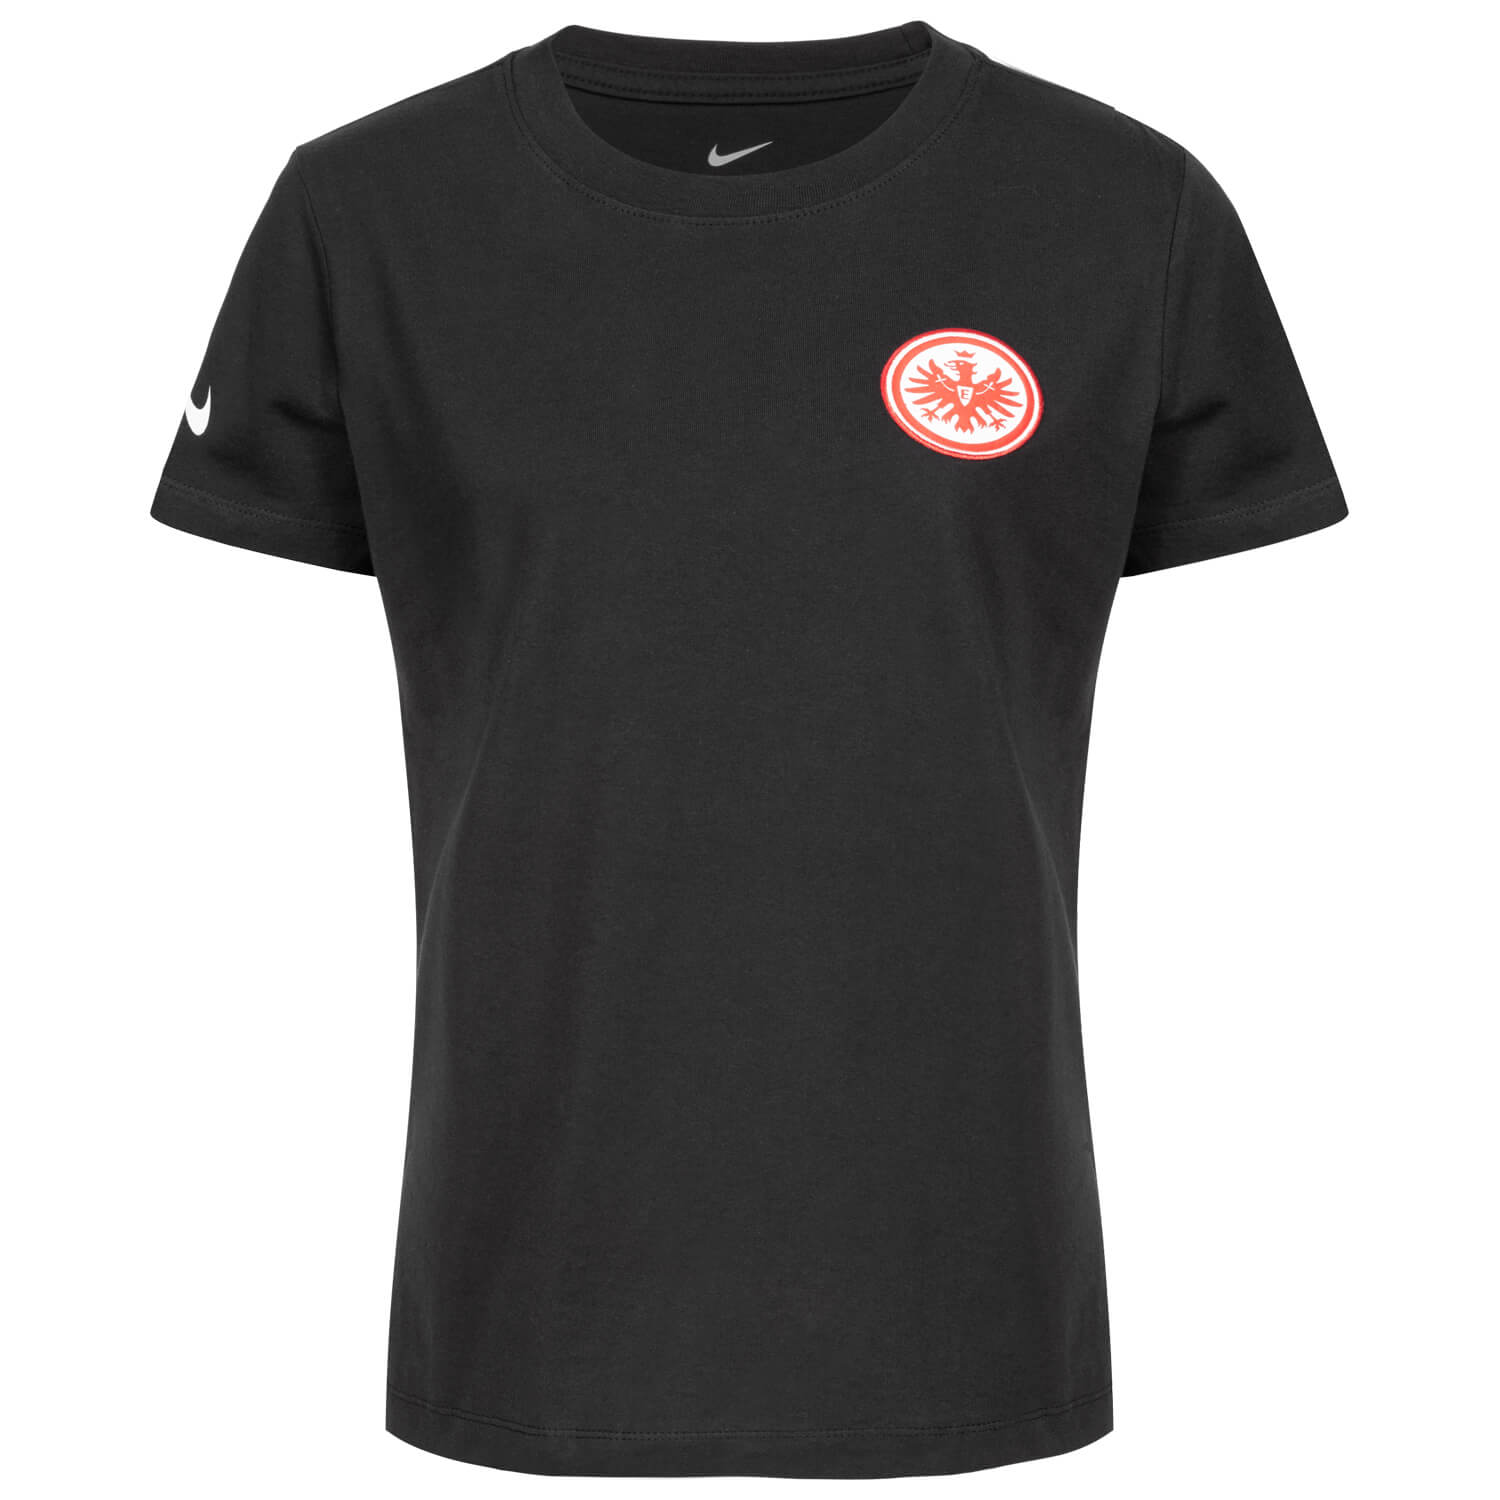 Bild 1: Nike Damen T-Shirt Basic schwarz